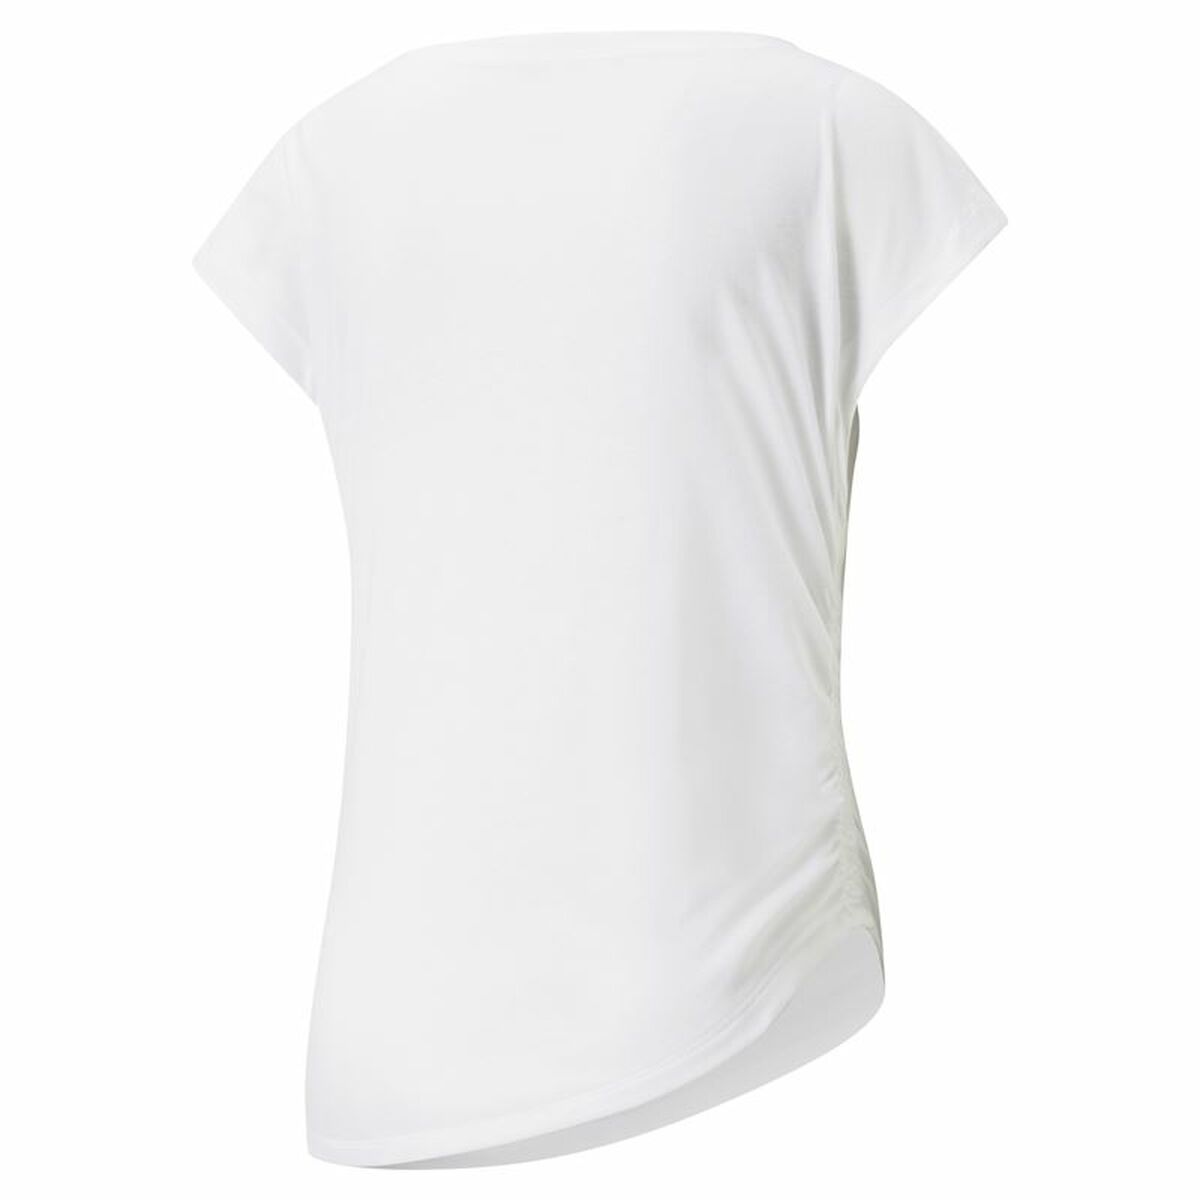 Damen Kurzarm-T-Shirt Puma Studio Foundation Weiß